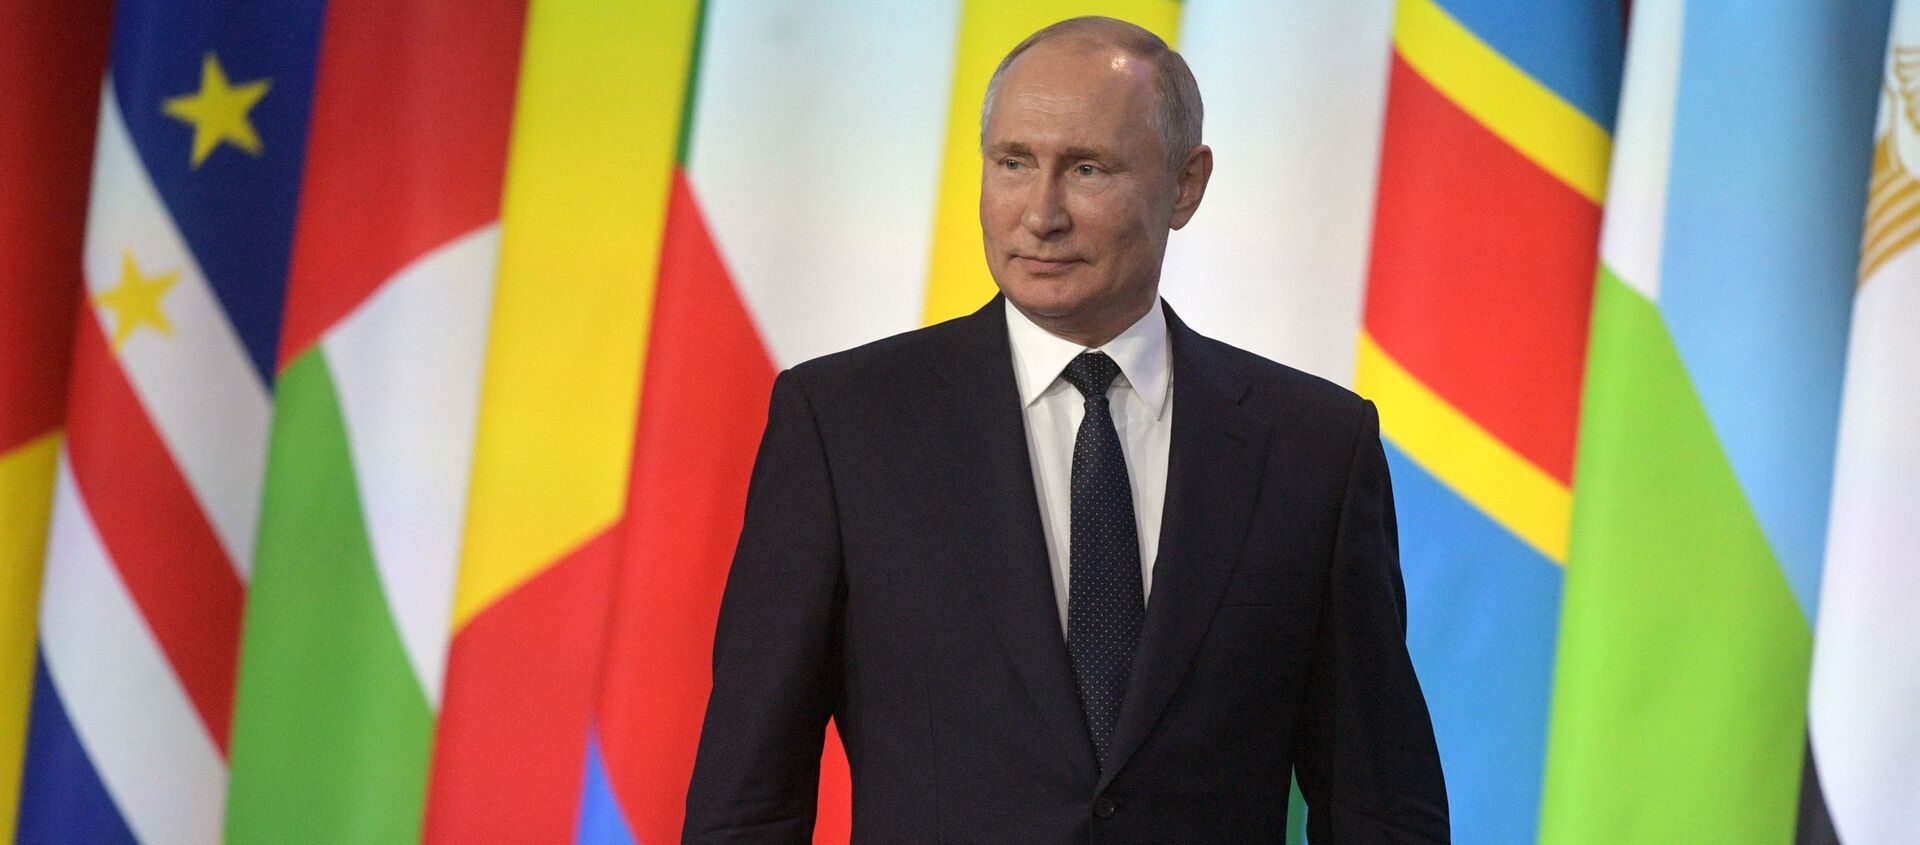 Russian President Putin takes part in the Russia-Africa Forum - Sputnik International, 1920, 31.10.2019